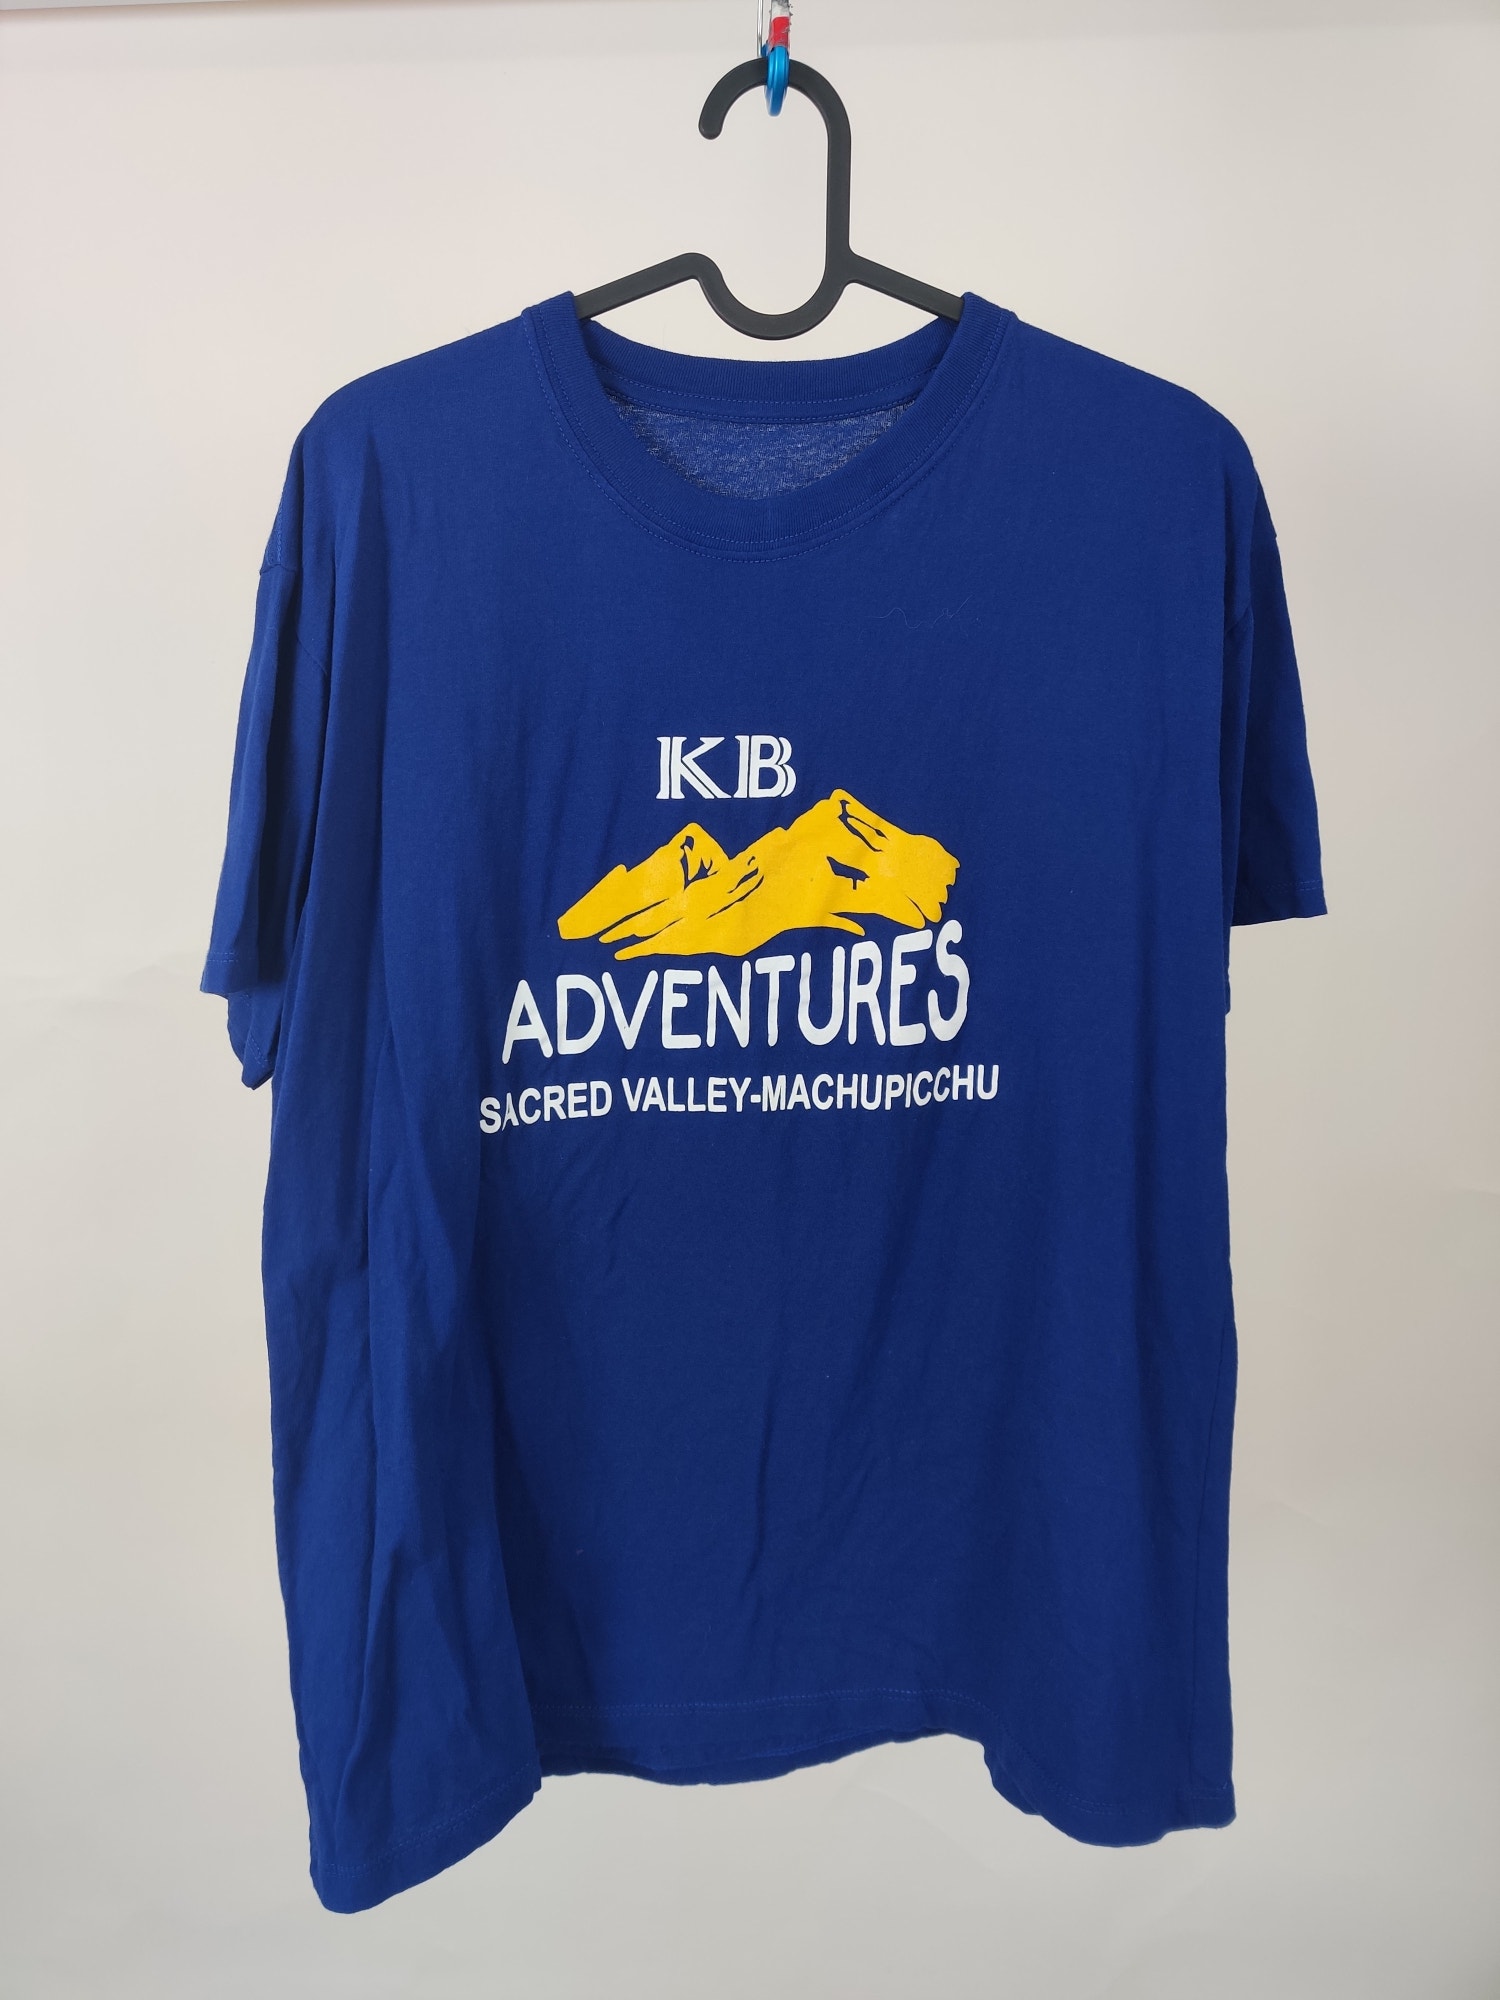 (V) VTG RARE KB Adventures Sacred Valley-Machupicchu Peru Men shirt SS sz S - Picture 2 of 7